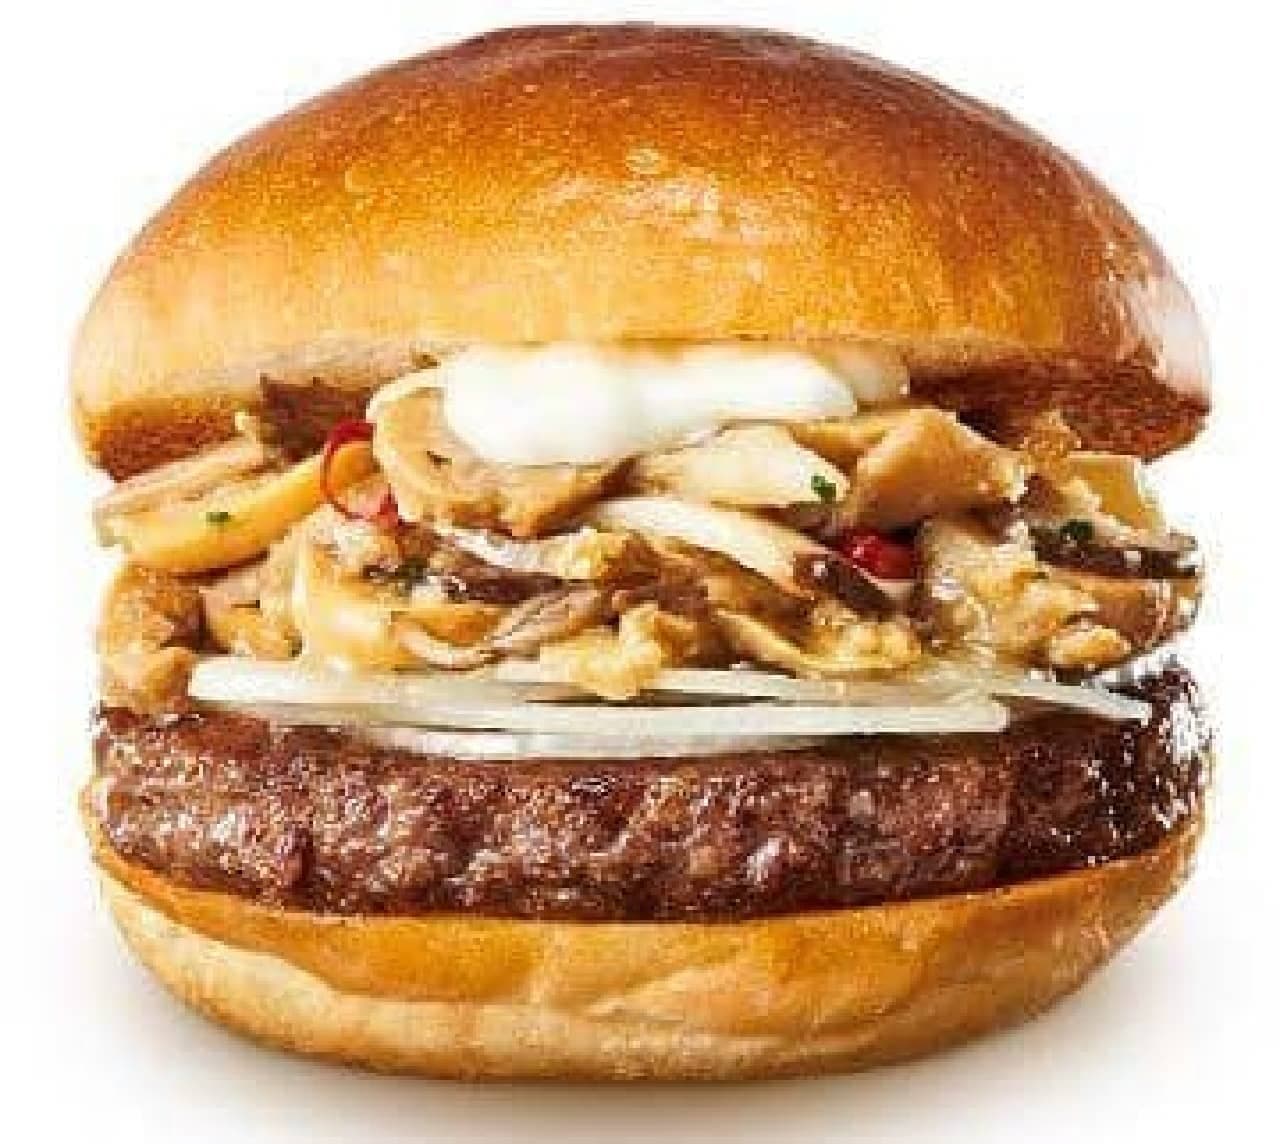 Lotteria "Gibier Venison Burger (3 Kinds of Mushroom Confit and Hokkaido Cheese)"